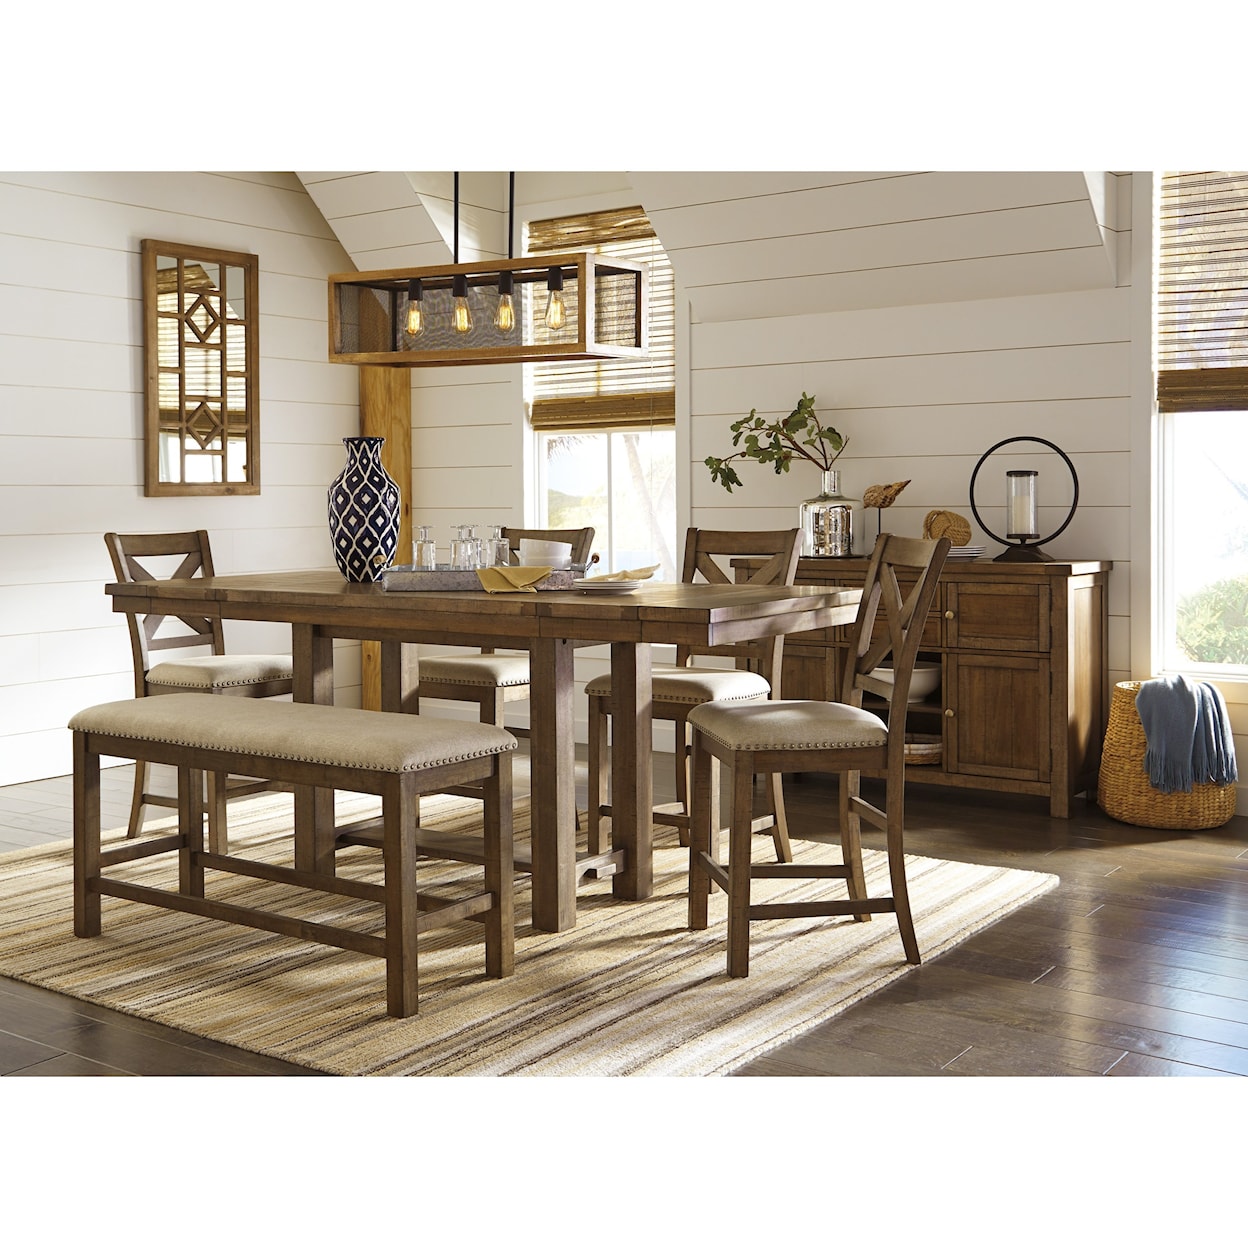 Ashley Furniture Signature Design Moriville Dining Room Group